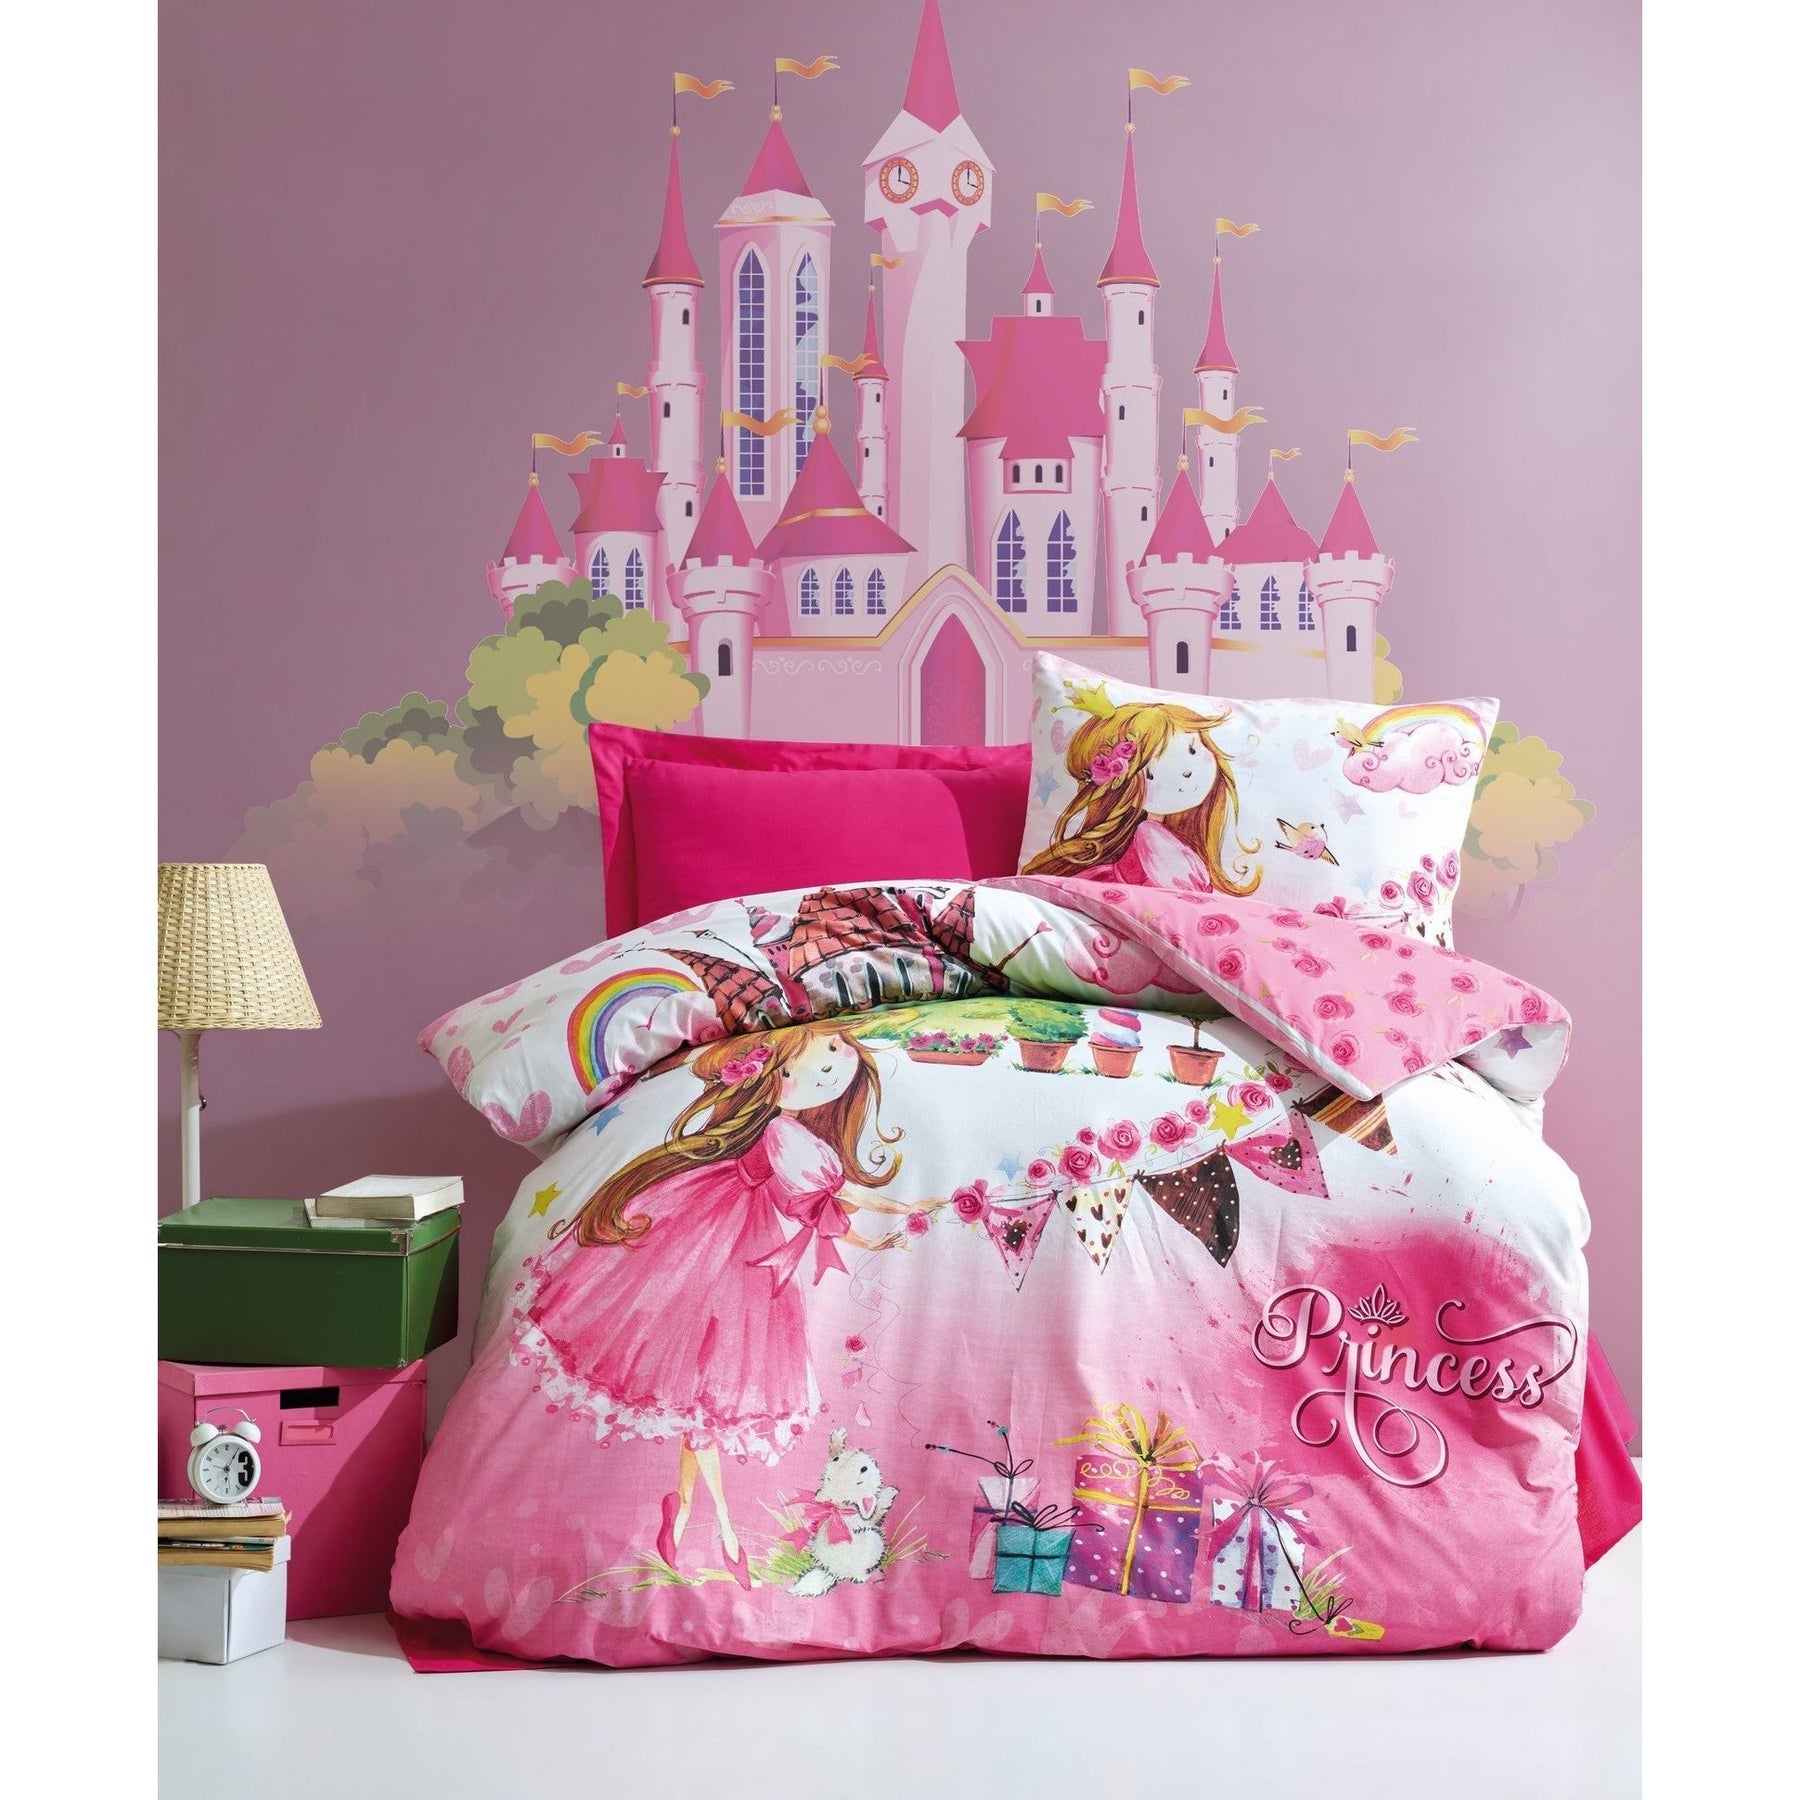 Set lenjerie pentru copii Princess, bumbac ranforce 100%, roz, 160 x 220 cm + 1 fata de perna